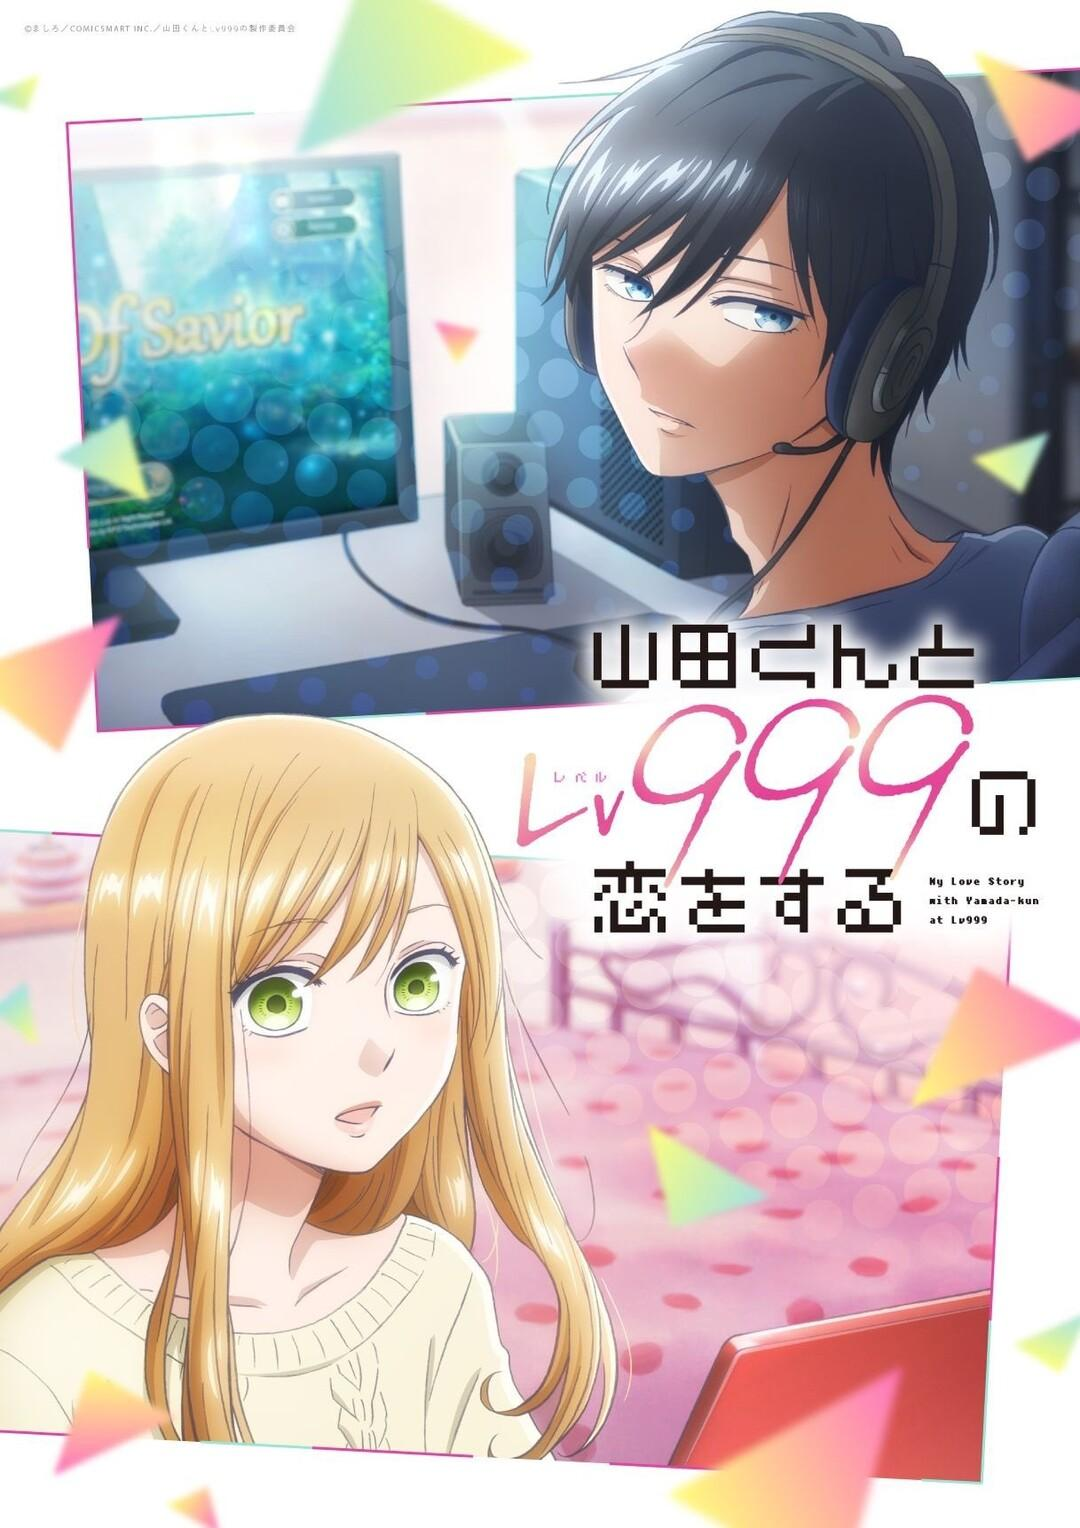 Сериал Моя любовь 999 уровня к Ямада-куну/Yamada-kun to Lv999 no Koi wo Suru онлайн